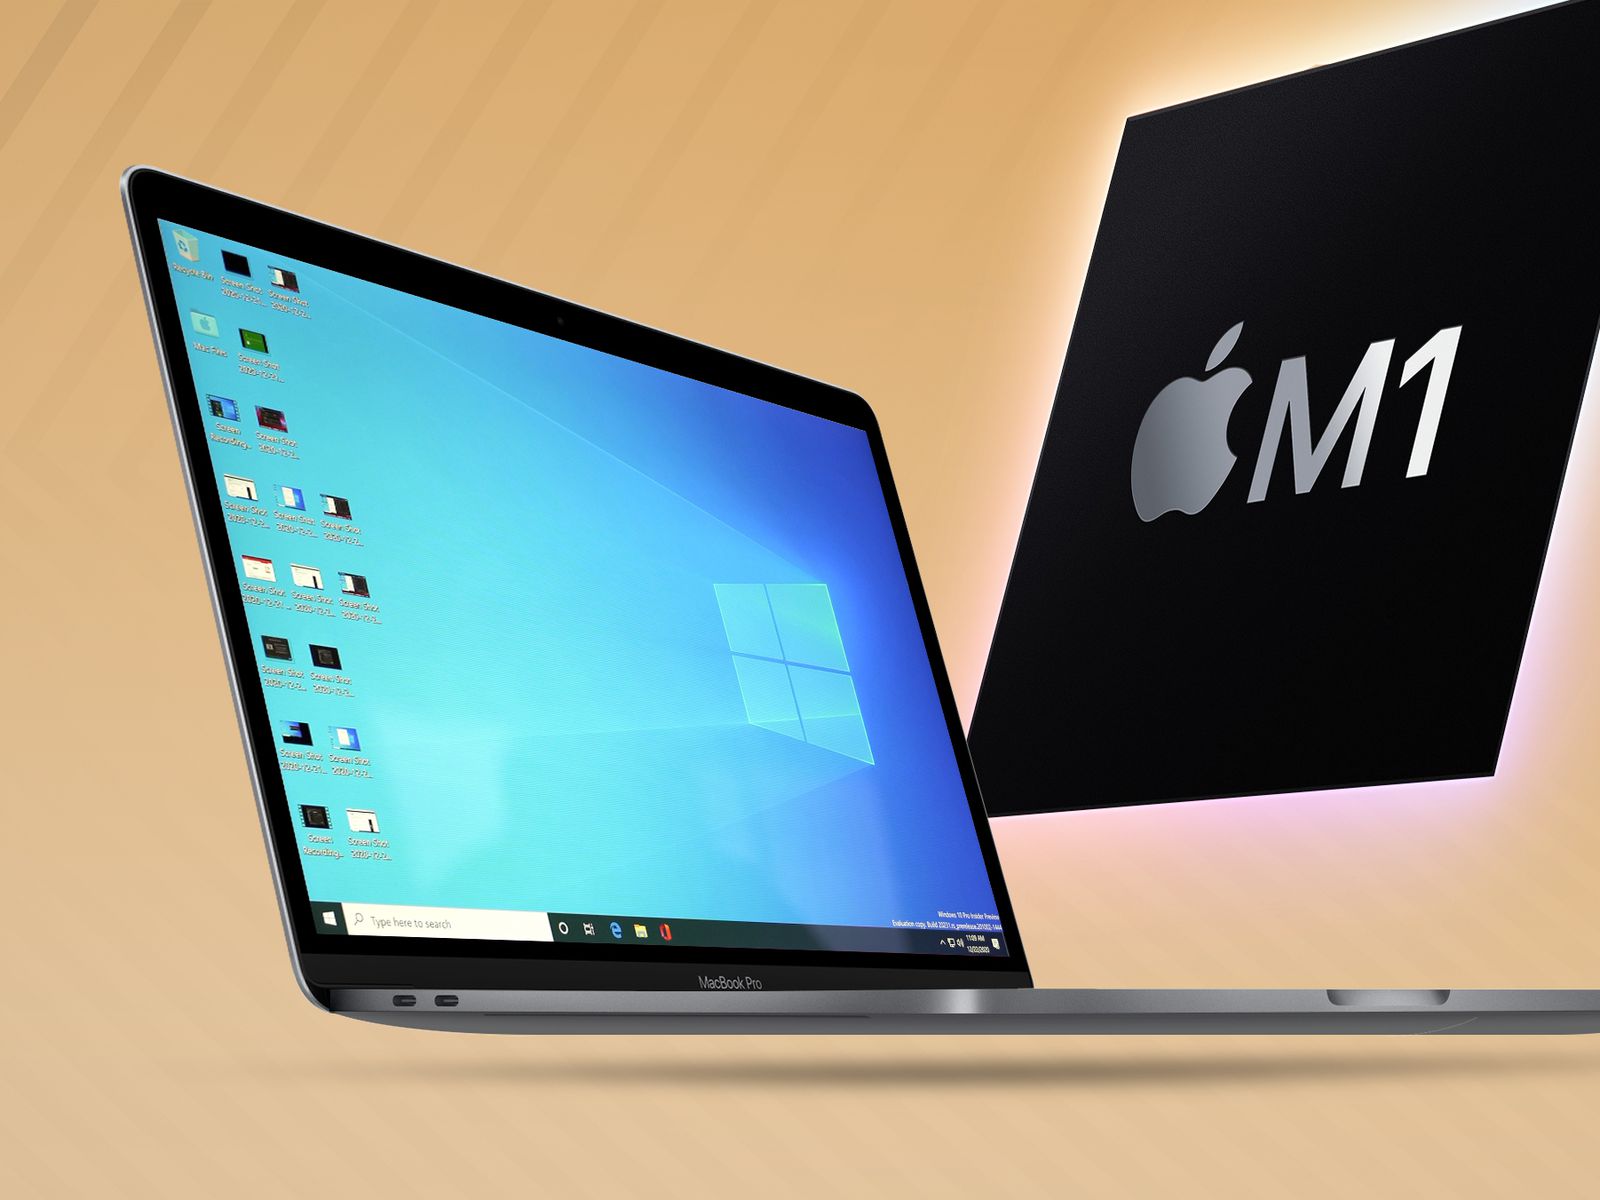 ubuntu m1 mac parallels